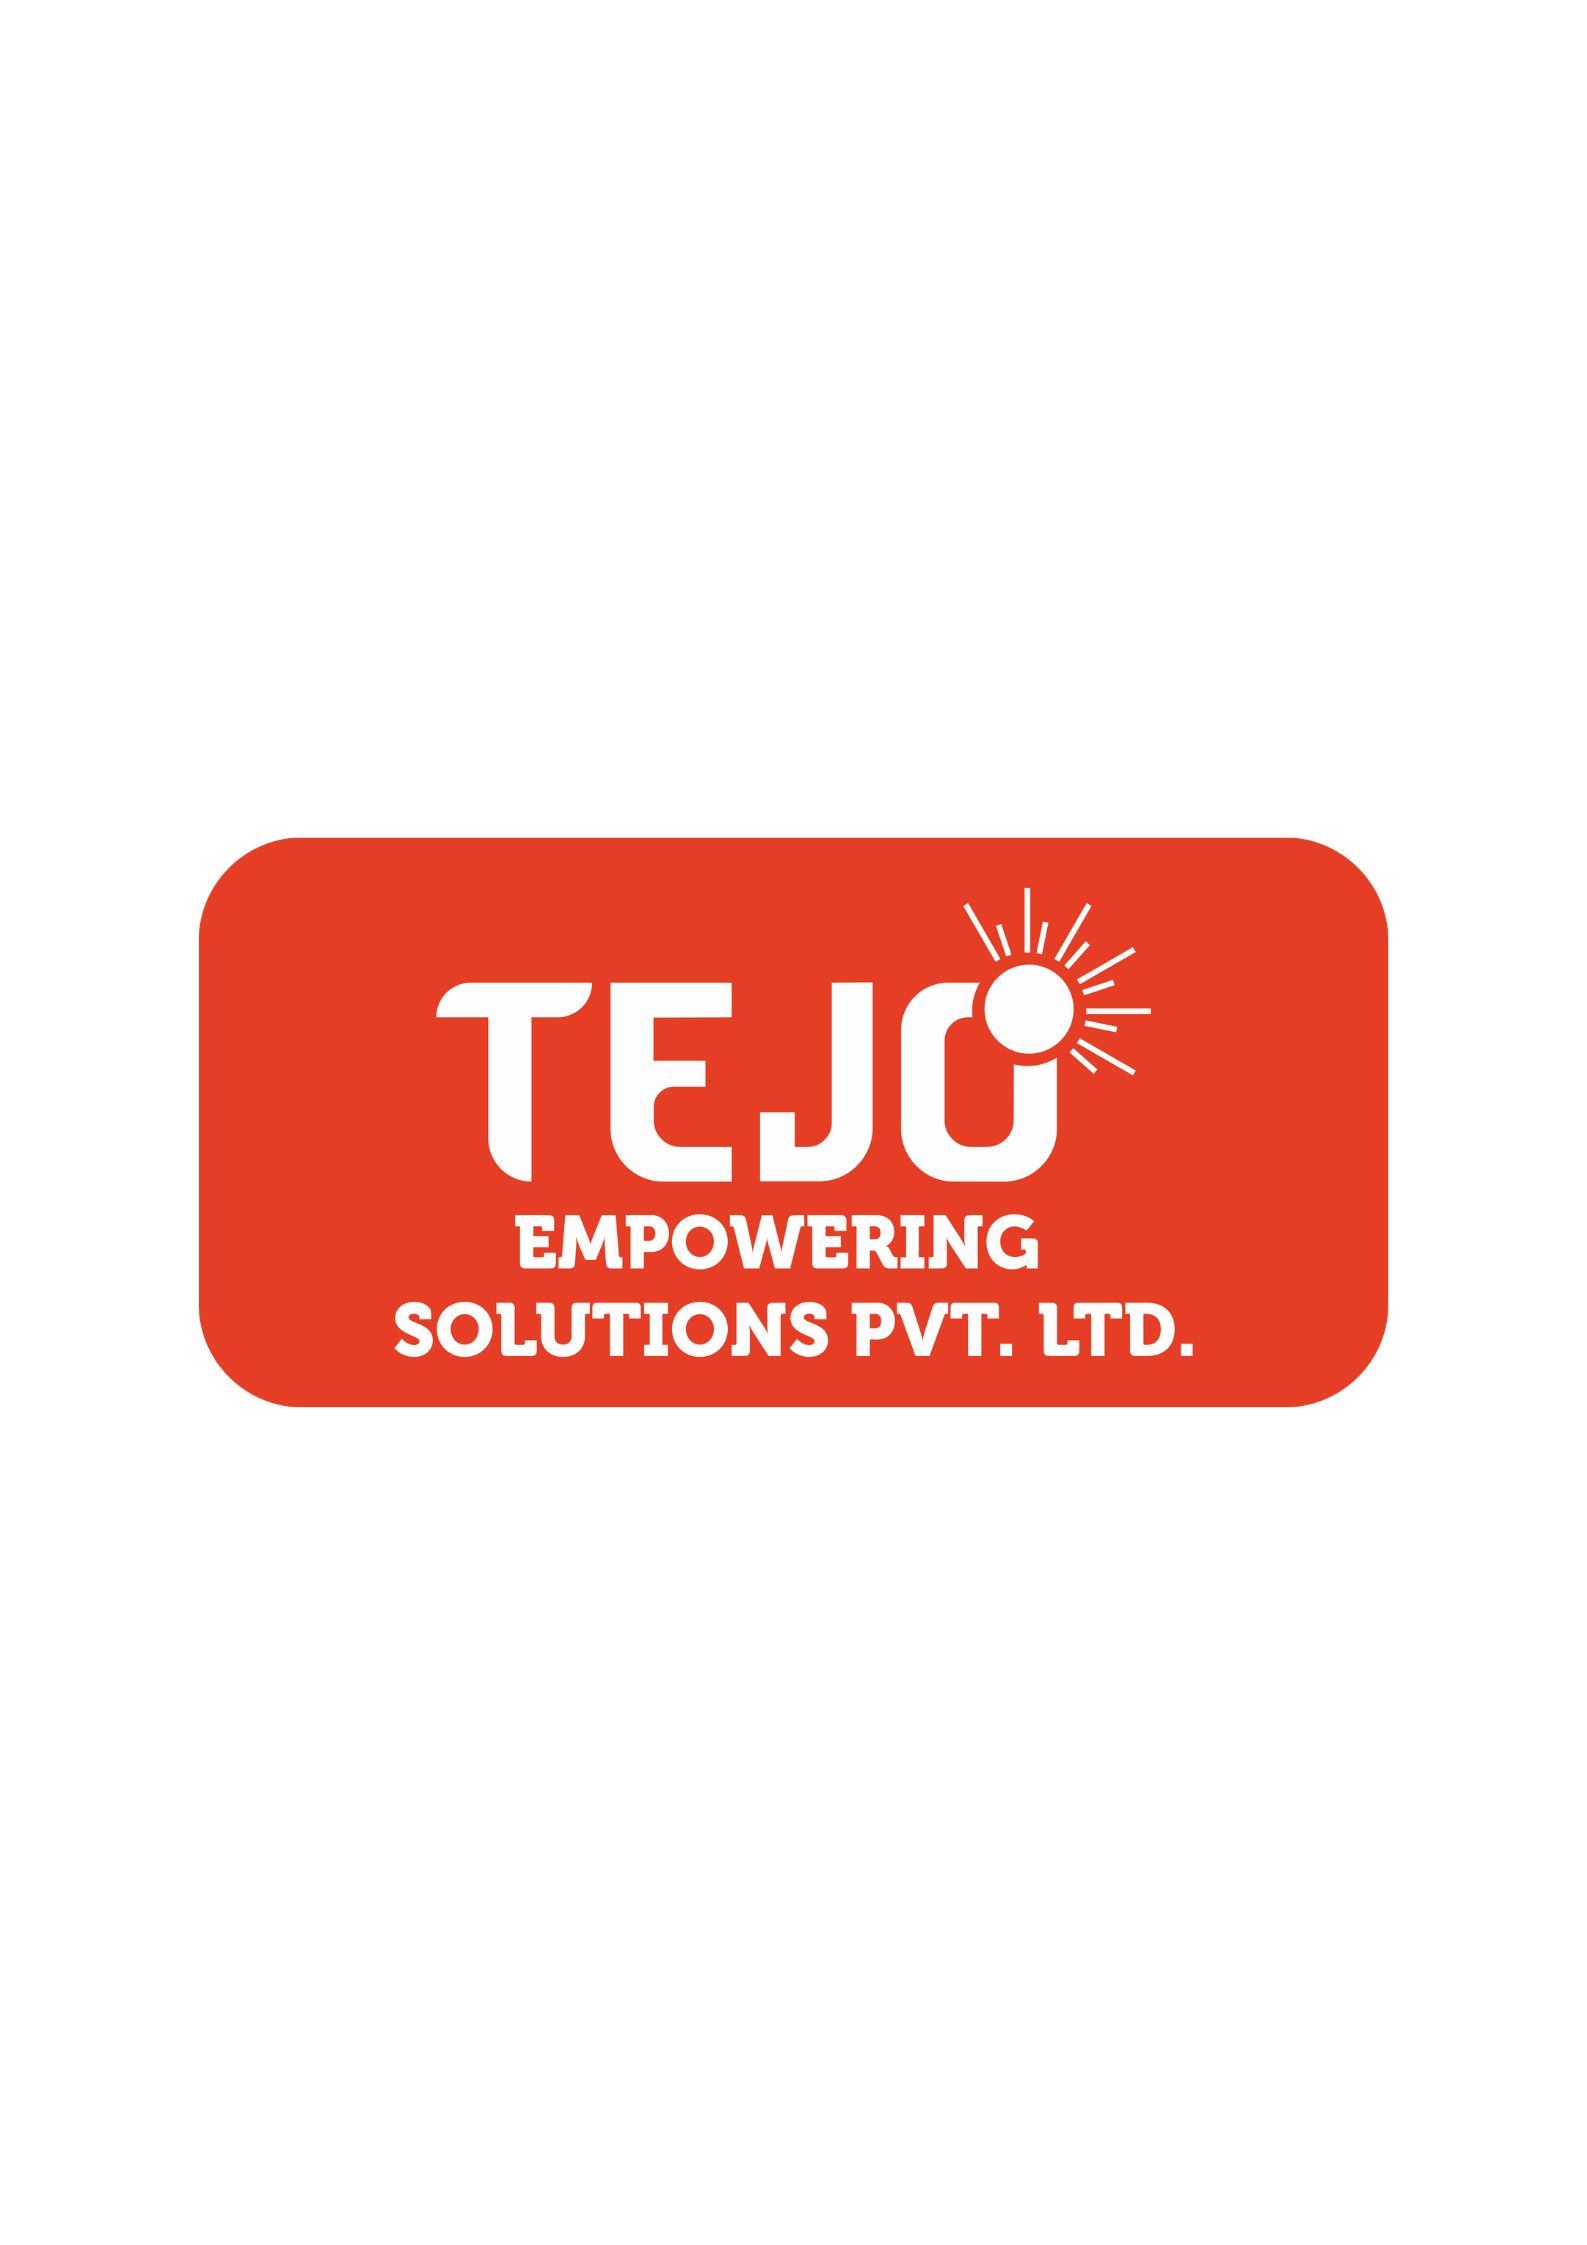 Tejo Empowering Solutions Pvt. Ltd.